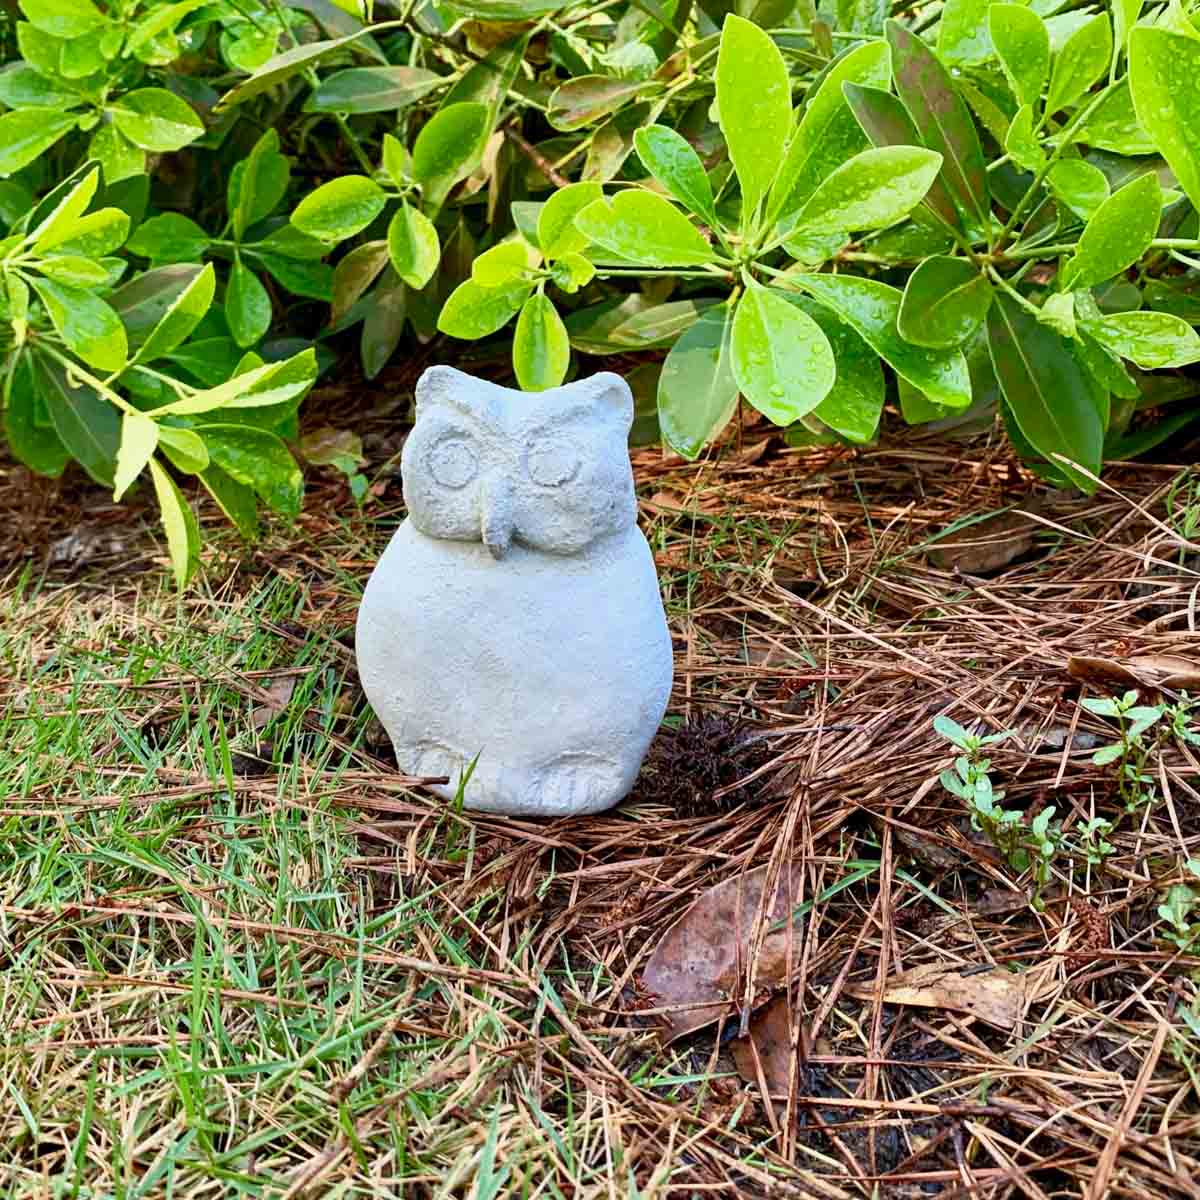 How to Make a Concrete Garden Owl Statue